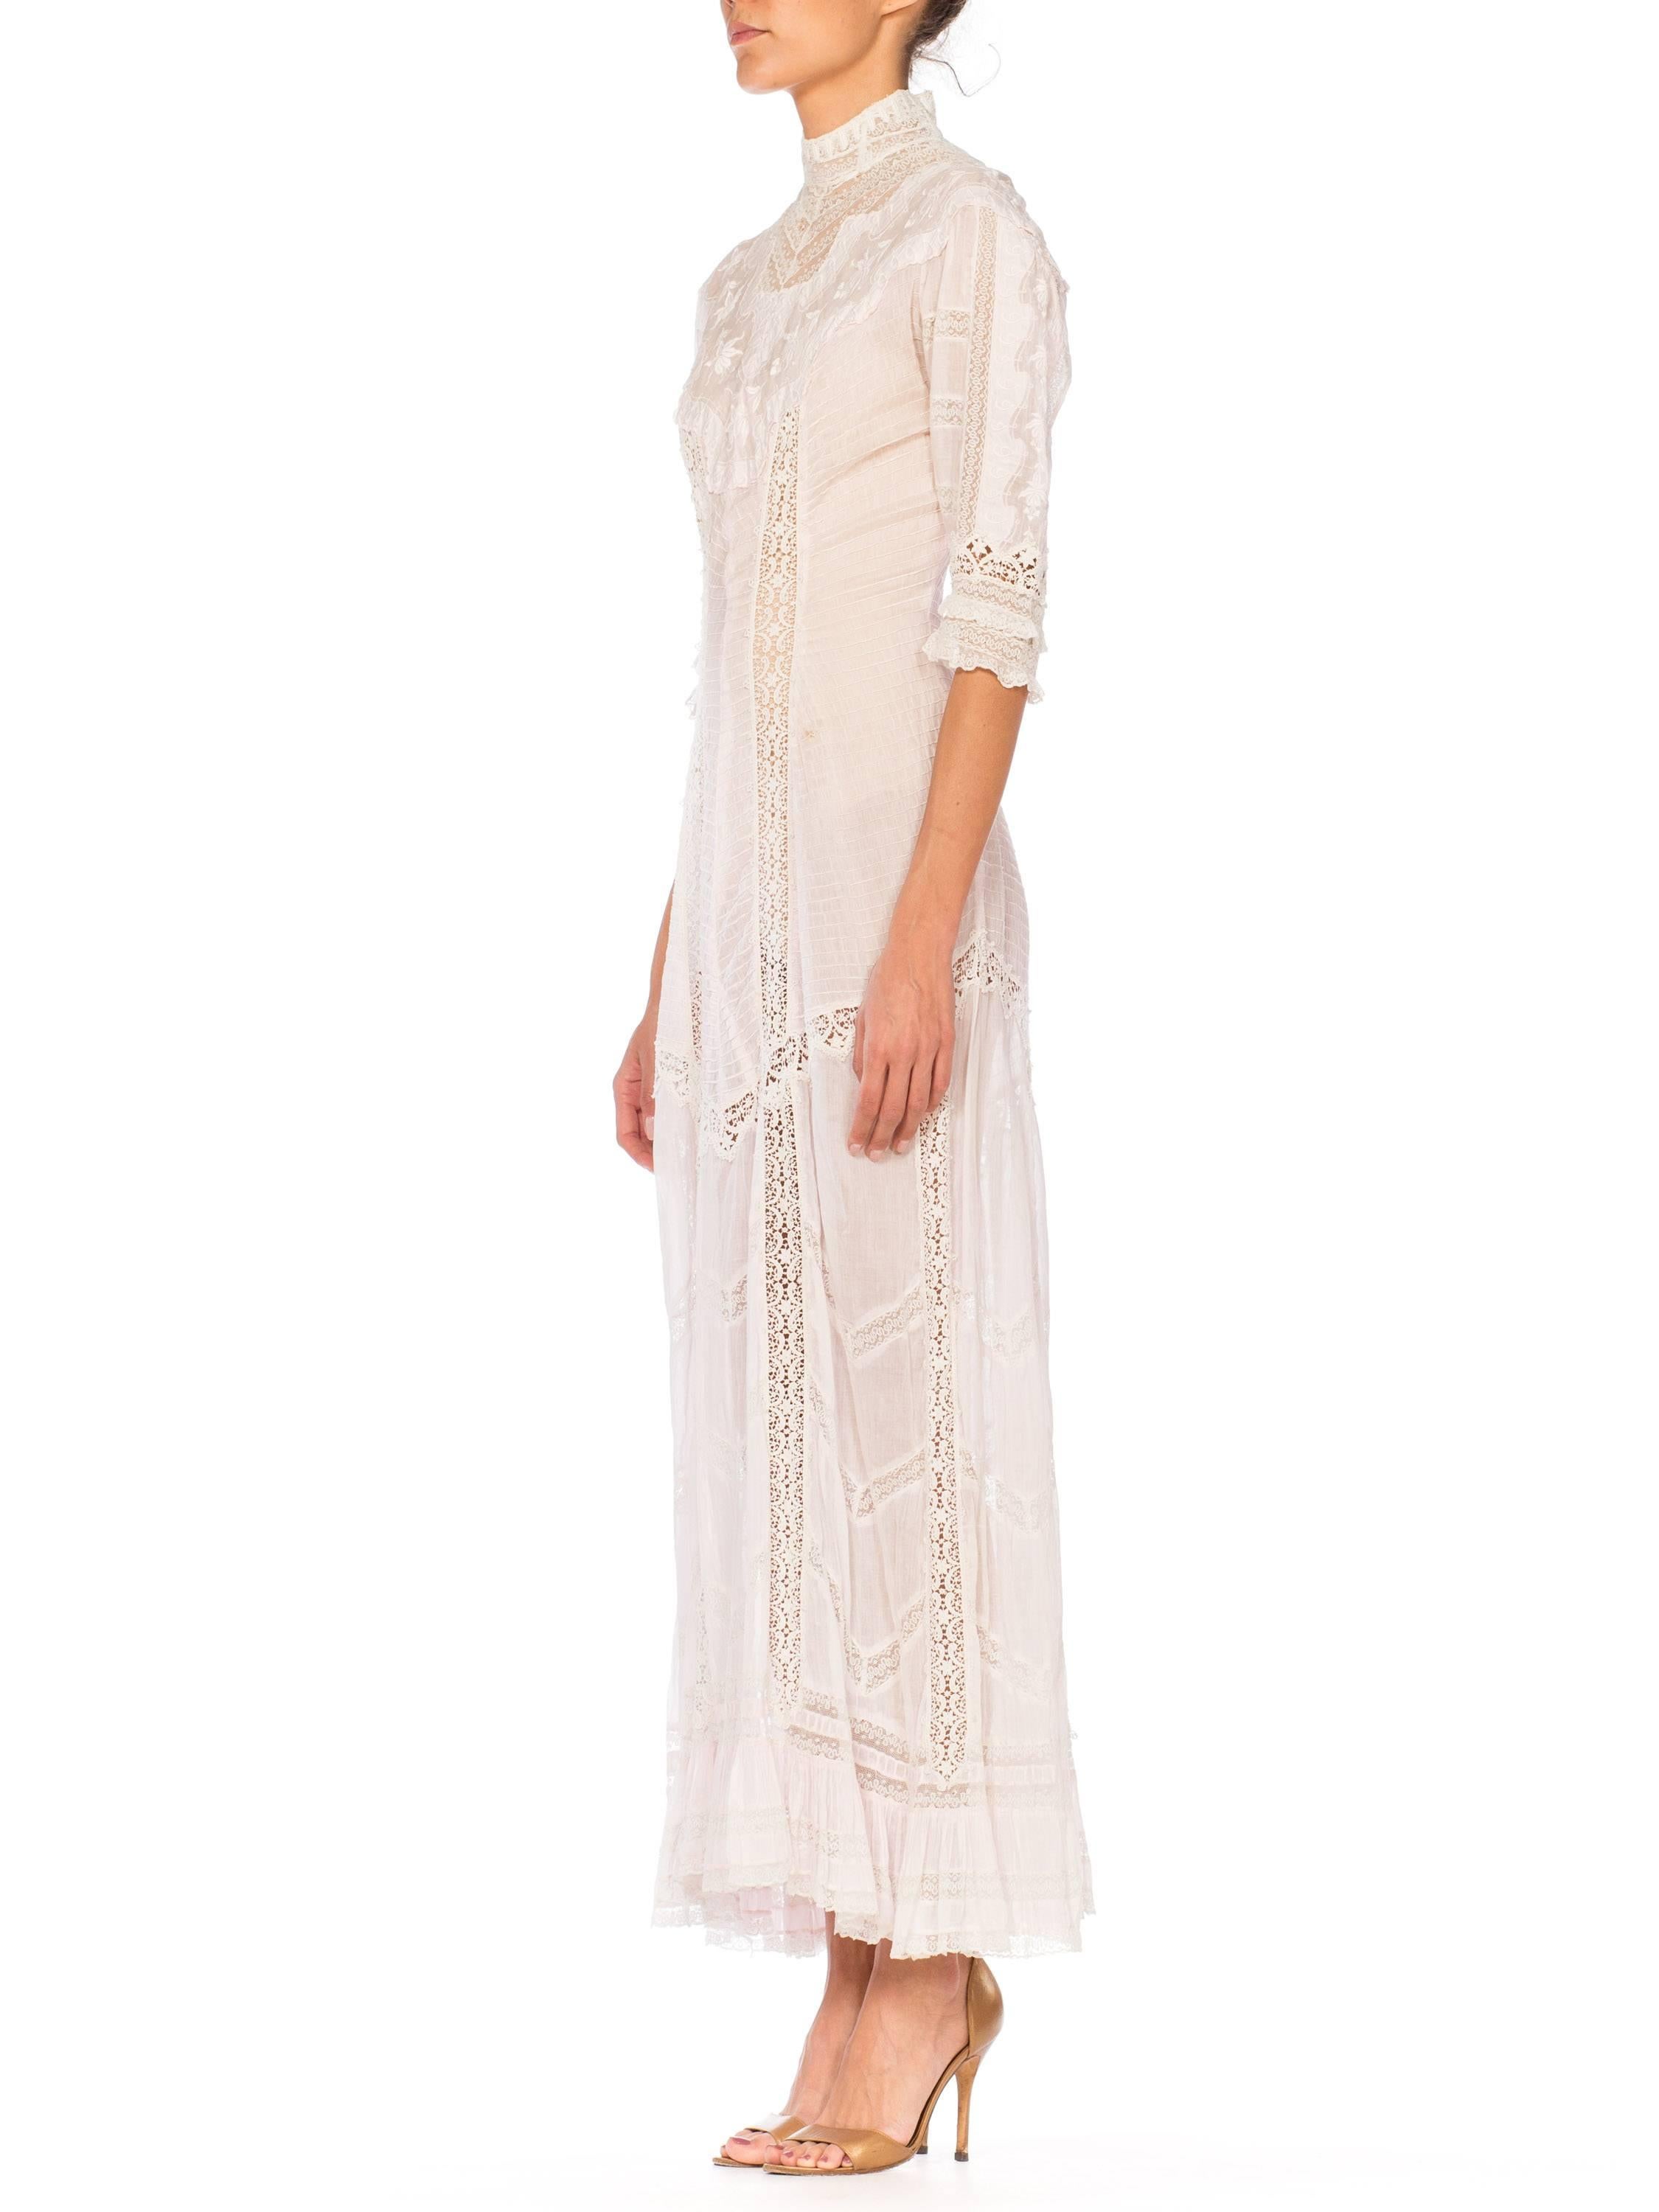 Belle Epoque Swan Neck Princess Line Victorian Organic Cotton and Lace Tea Dress 6